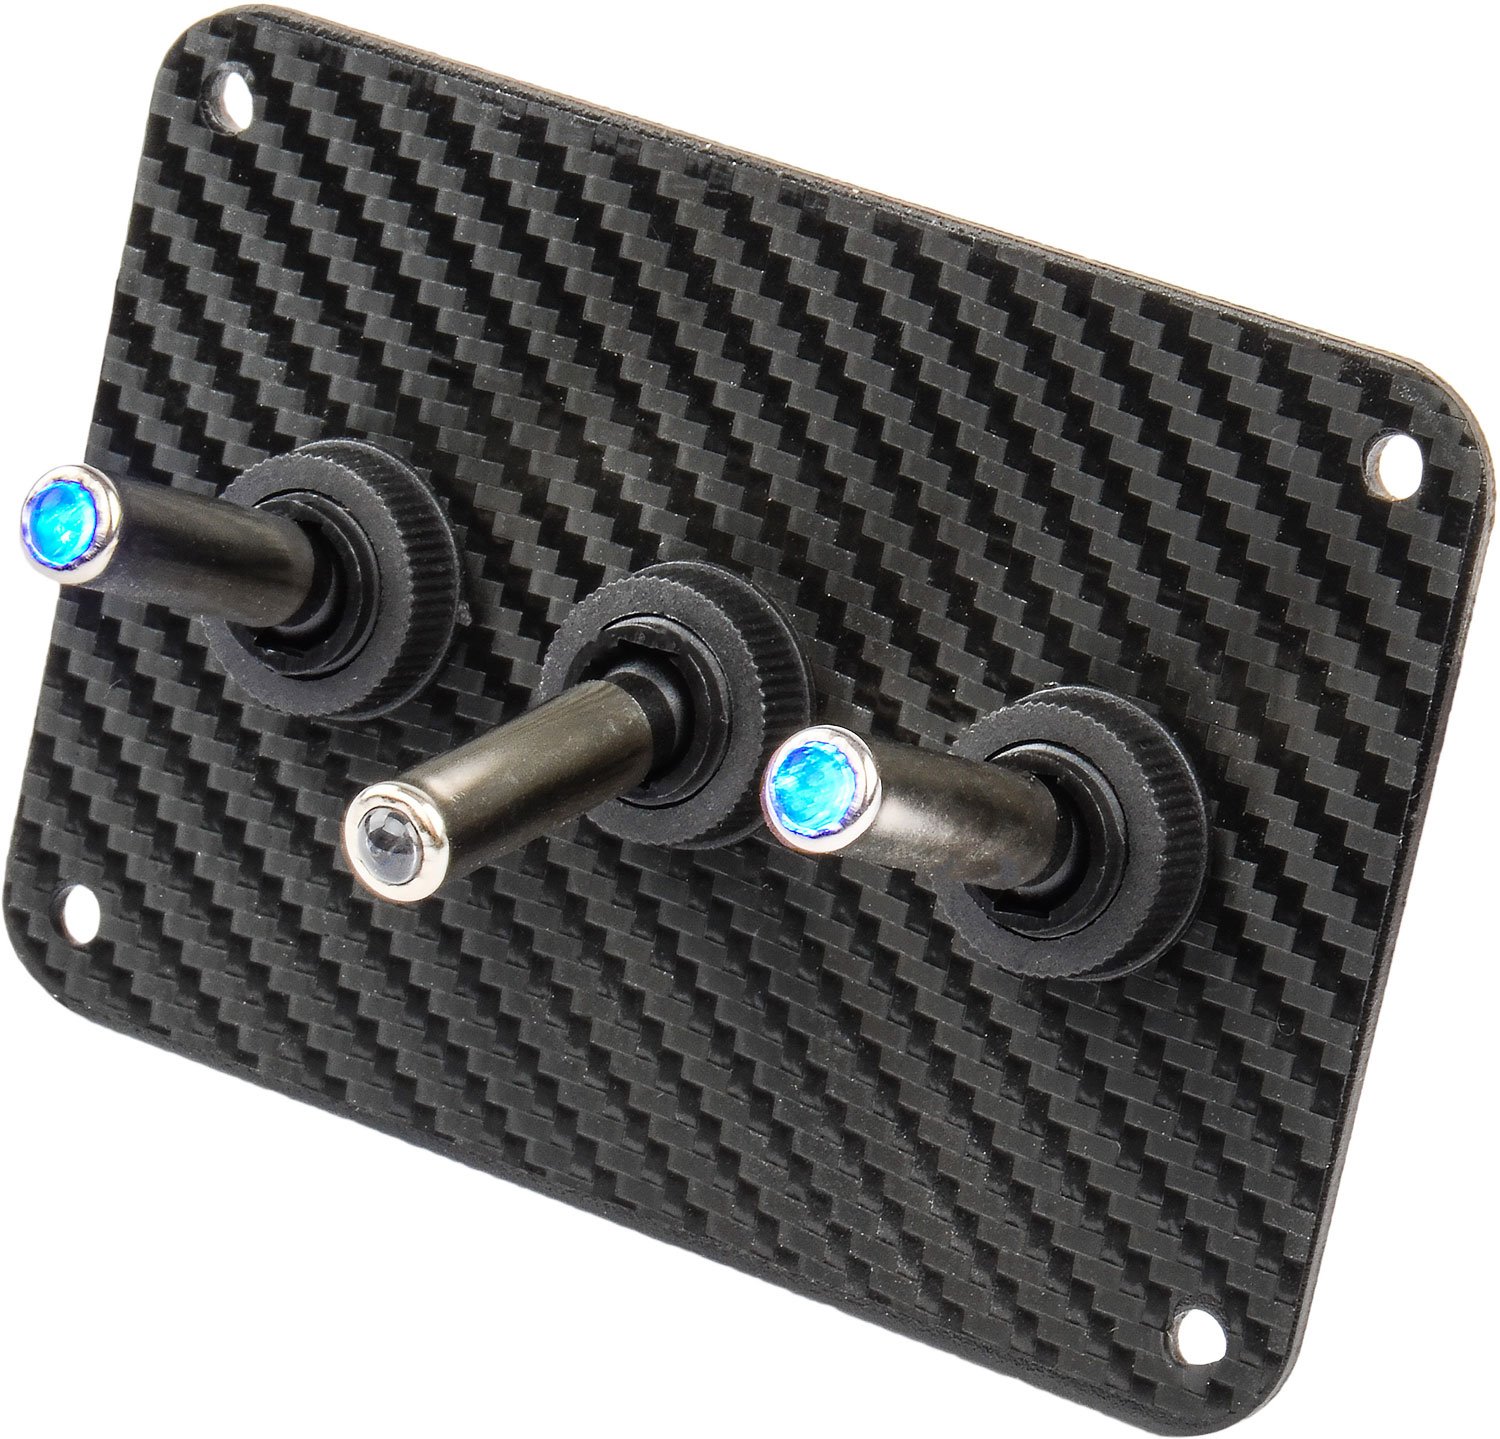 3-Toggle Panel with Blue LED Switches Black Carbon Fiber Vinyl Finish